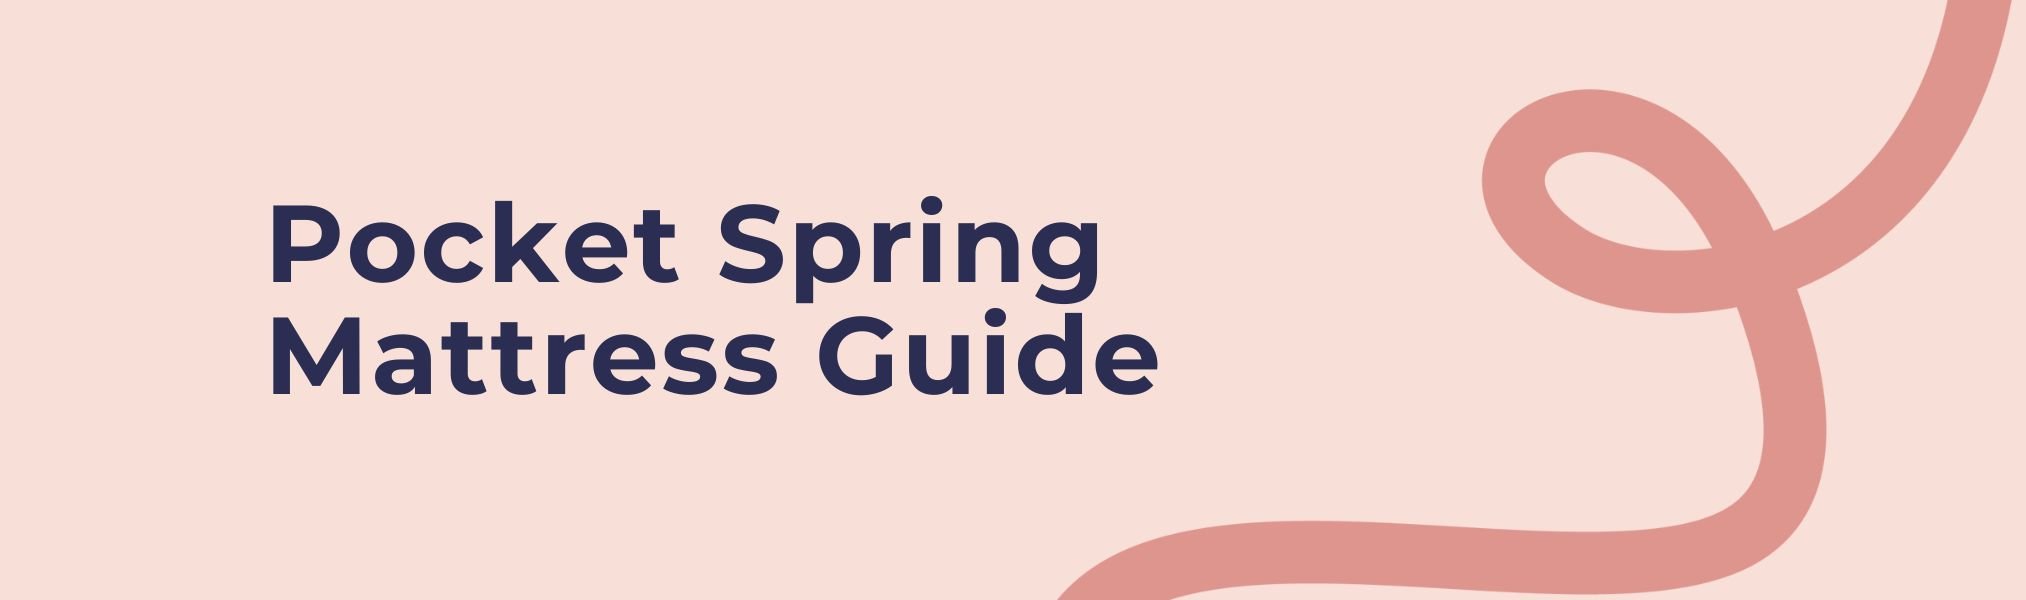 Pocket Spring Mattress Guide